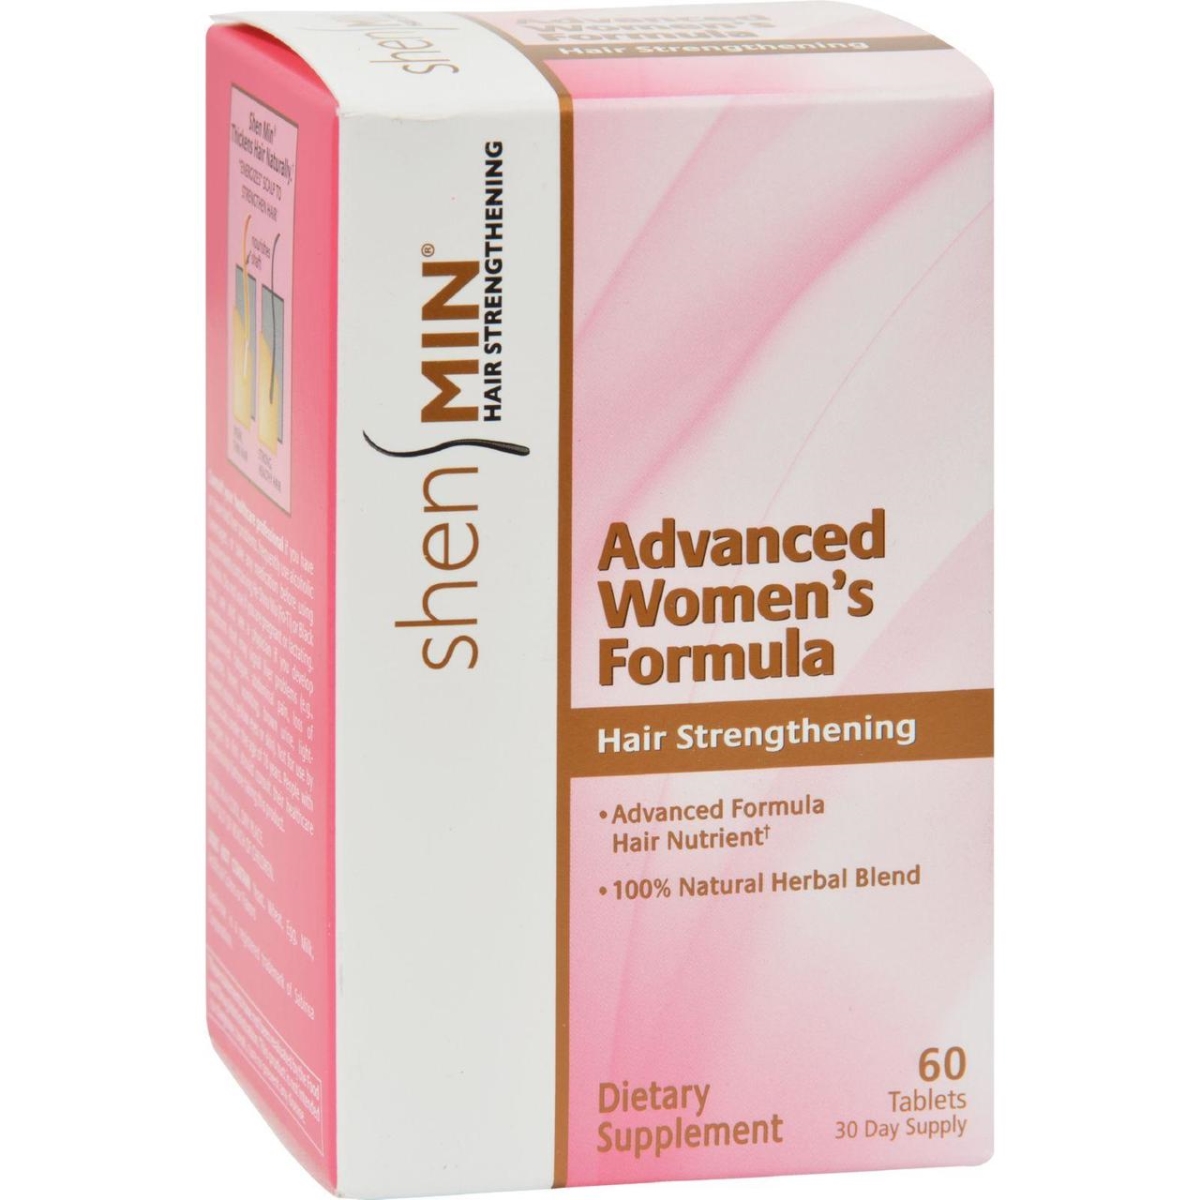 Hg0103739 Advanced Womens Formula Hair Strengthening - 60 Tablets